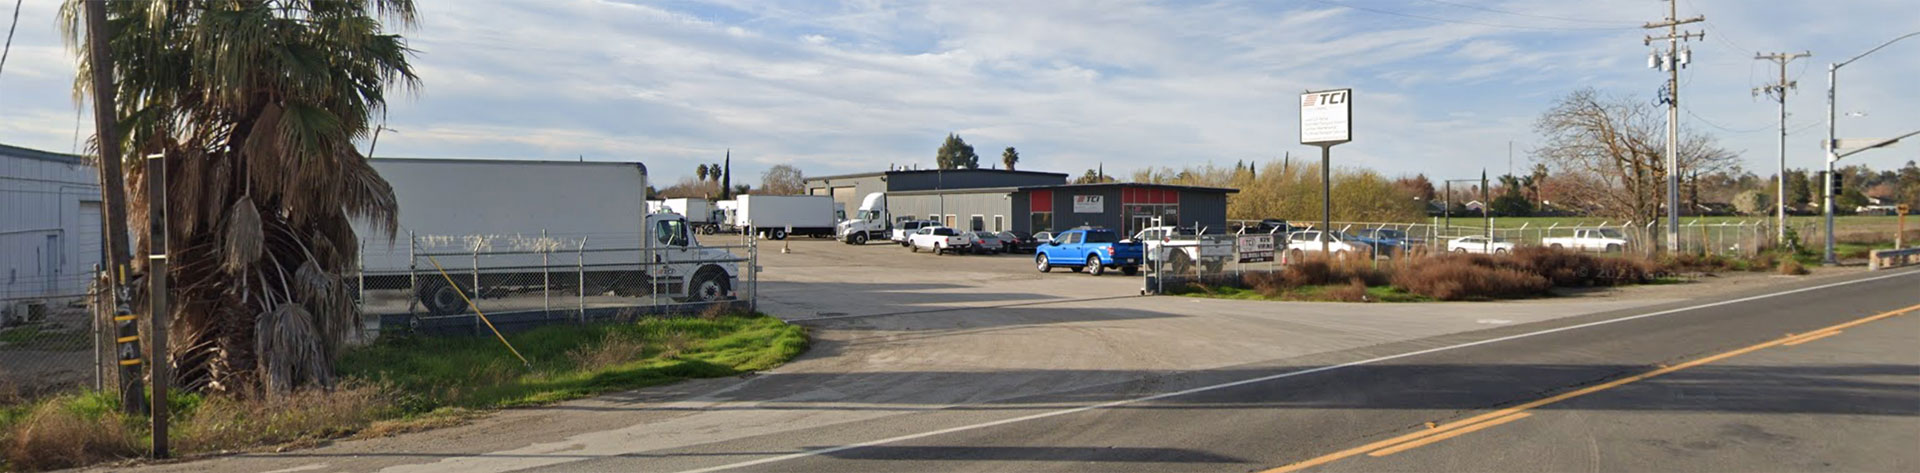 Street view of TCI Stockton location